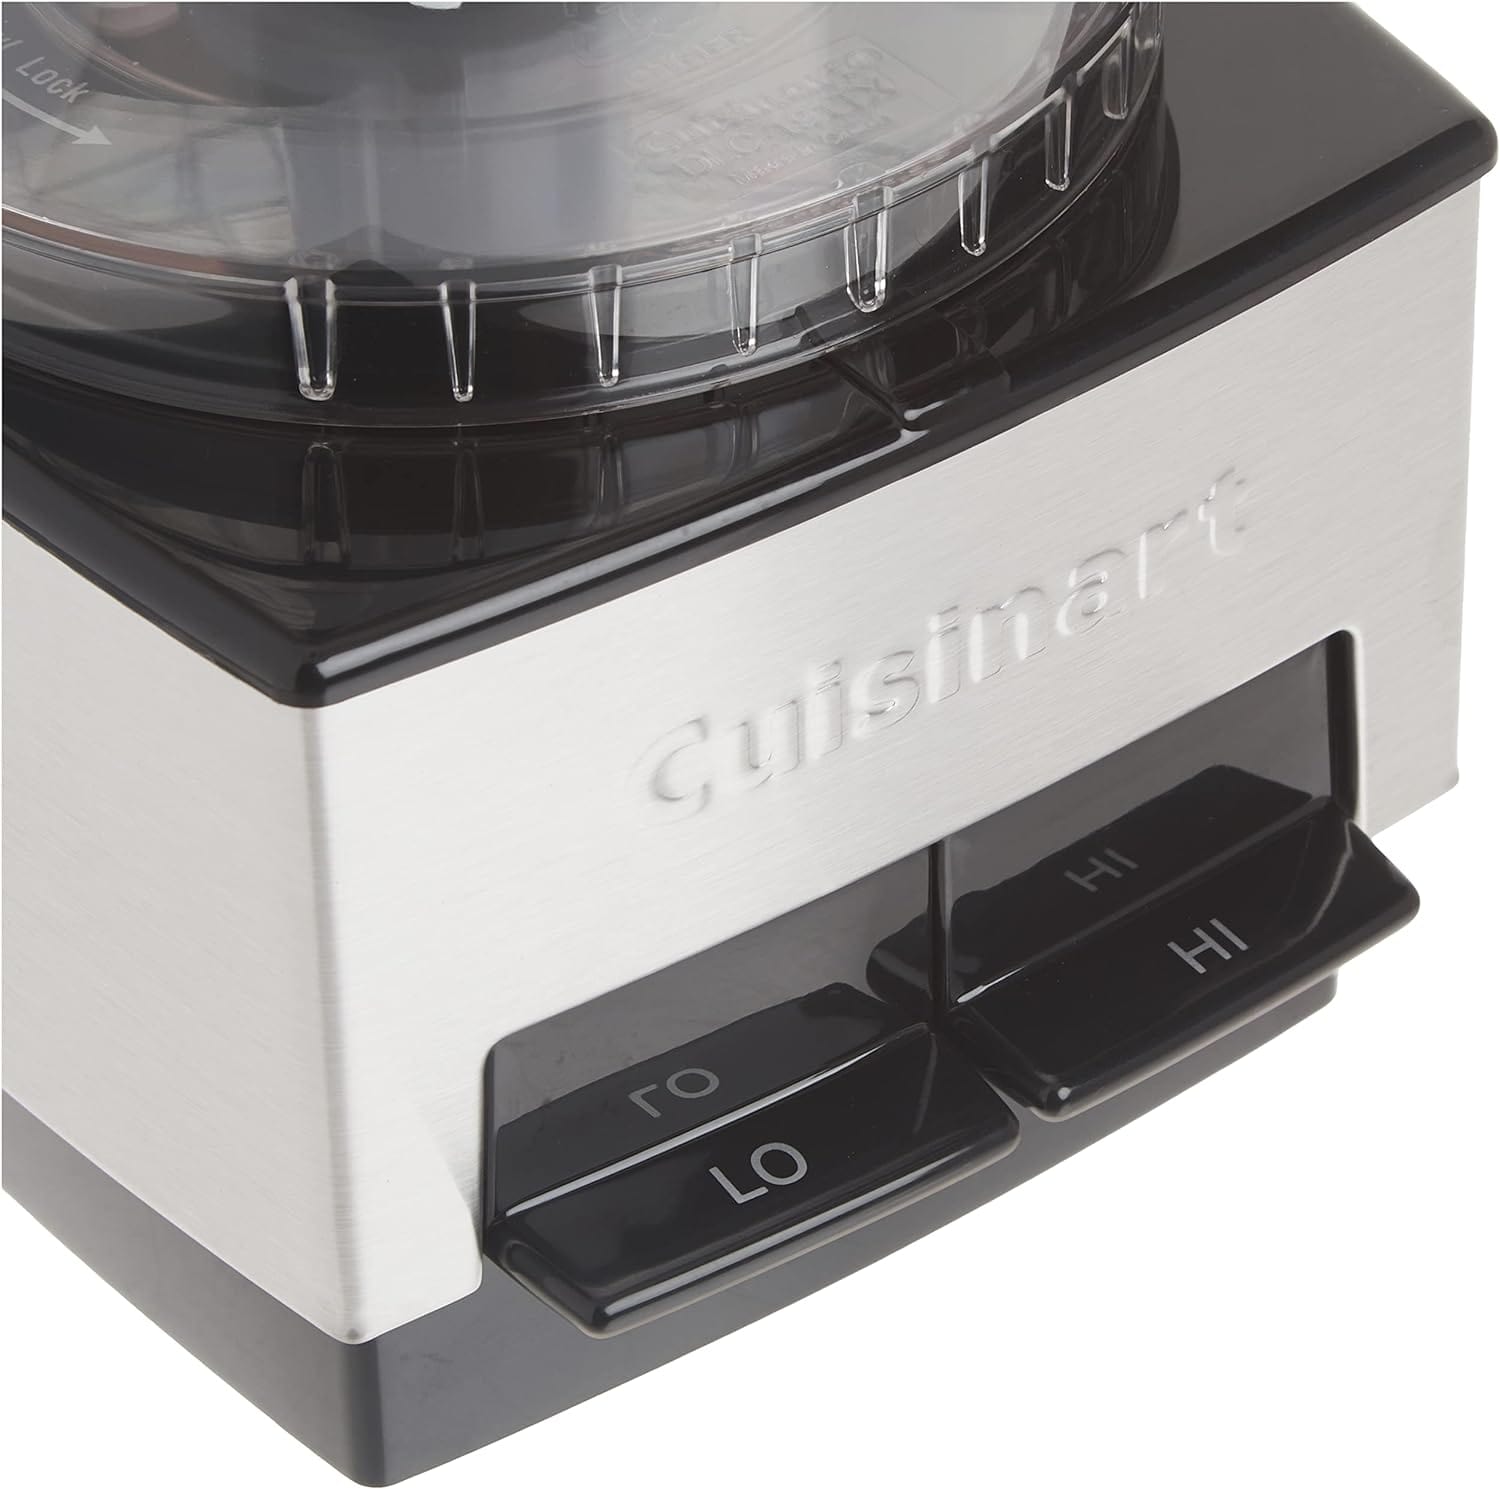 Cuisinart DLC-1SSFR 2.5 Cup Mini Food Prep Processor, Silver - Certified Refurbished